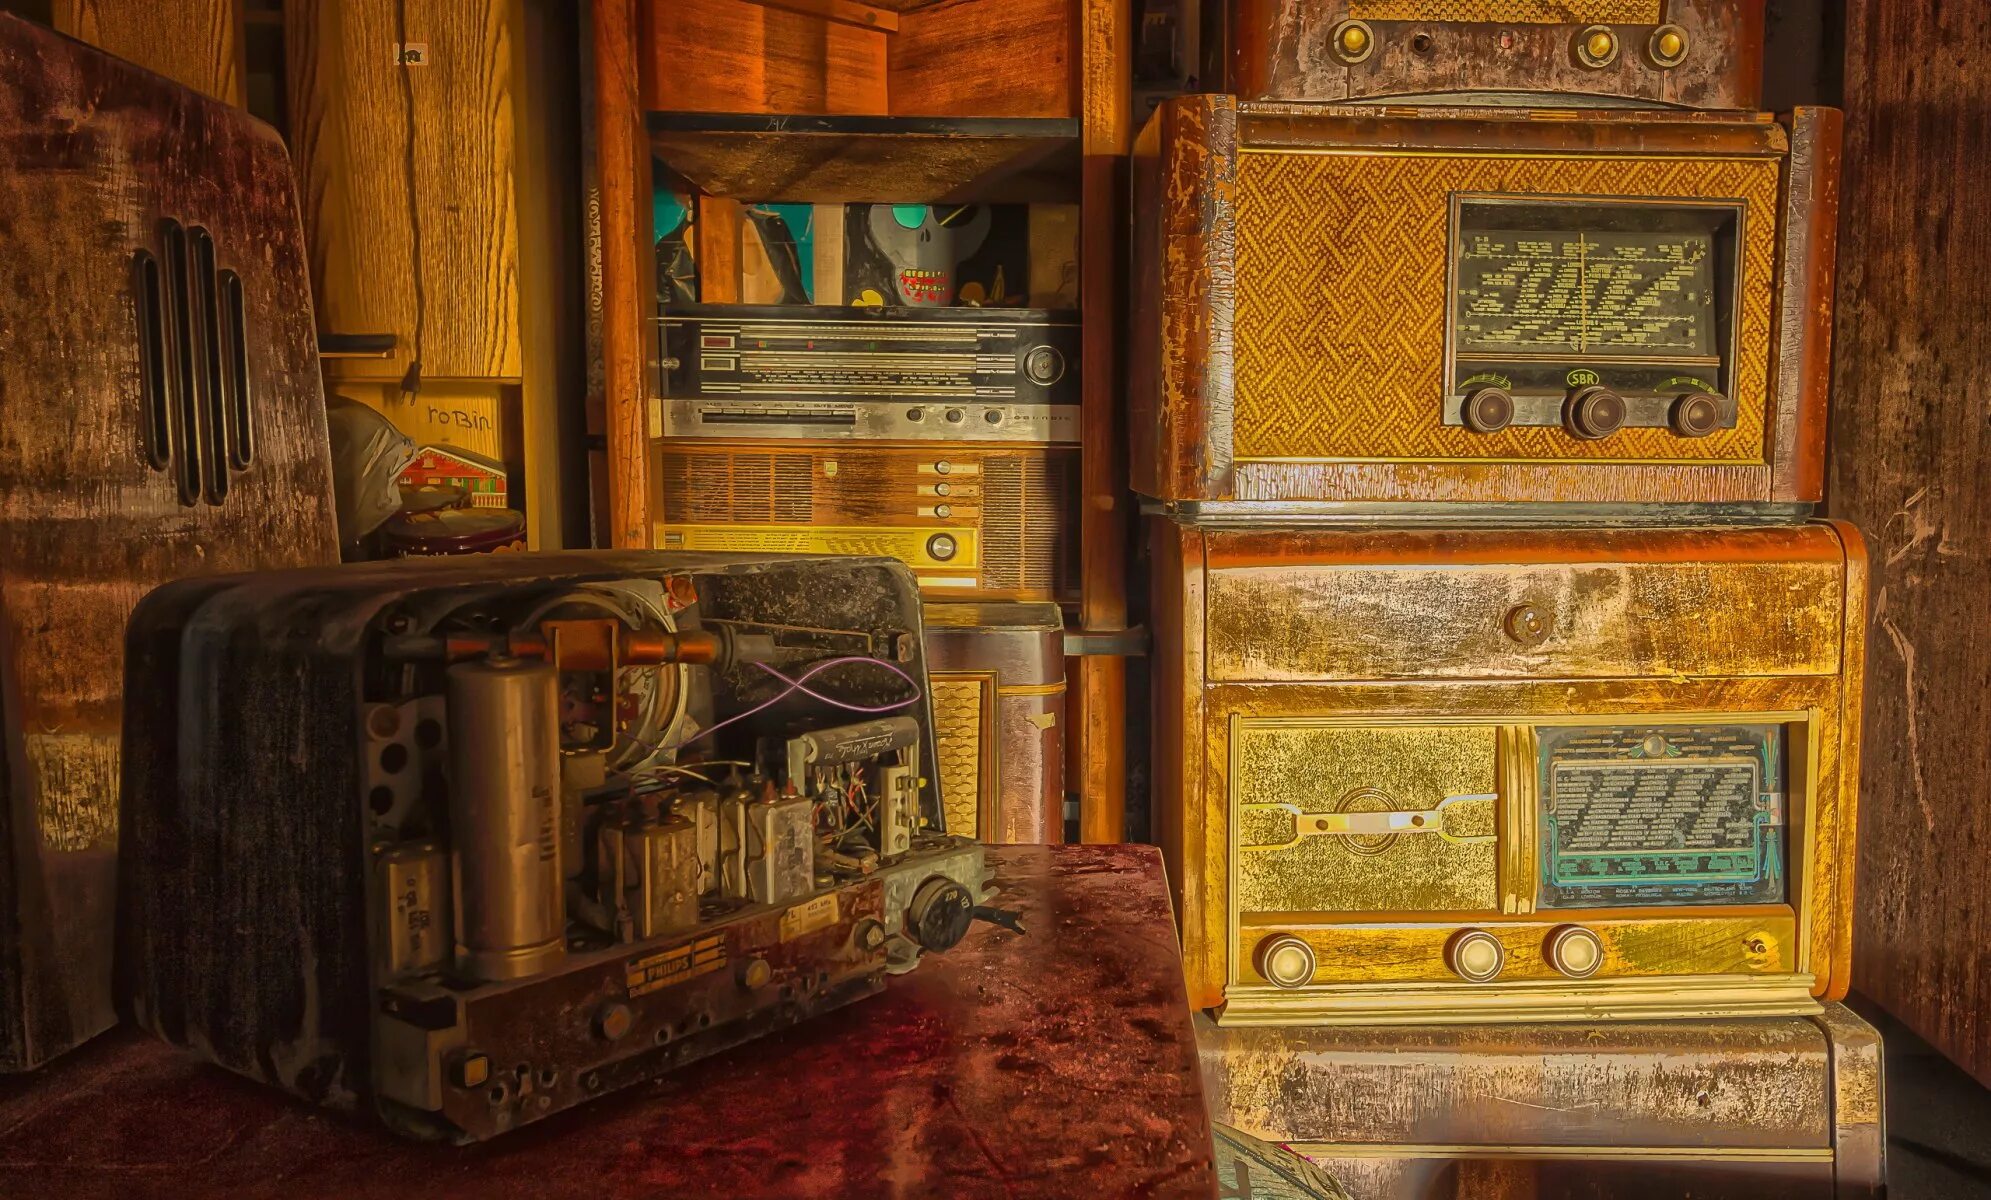 Сайт старое радио. Старый радиоприемник. Радиоприемник в стиле ретро. Радиоприемник в интерьере. Старый радиоприемник арт.